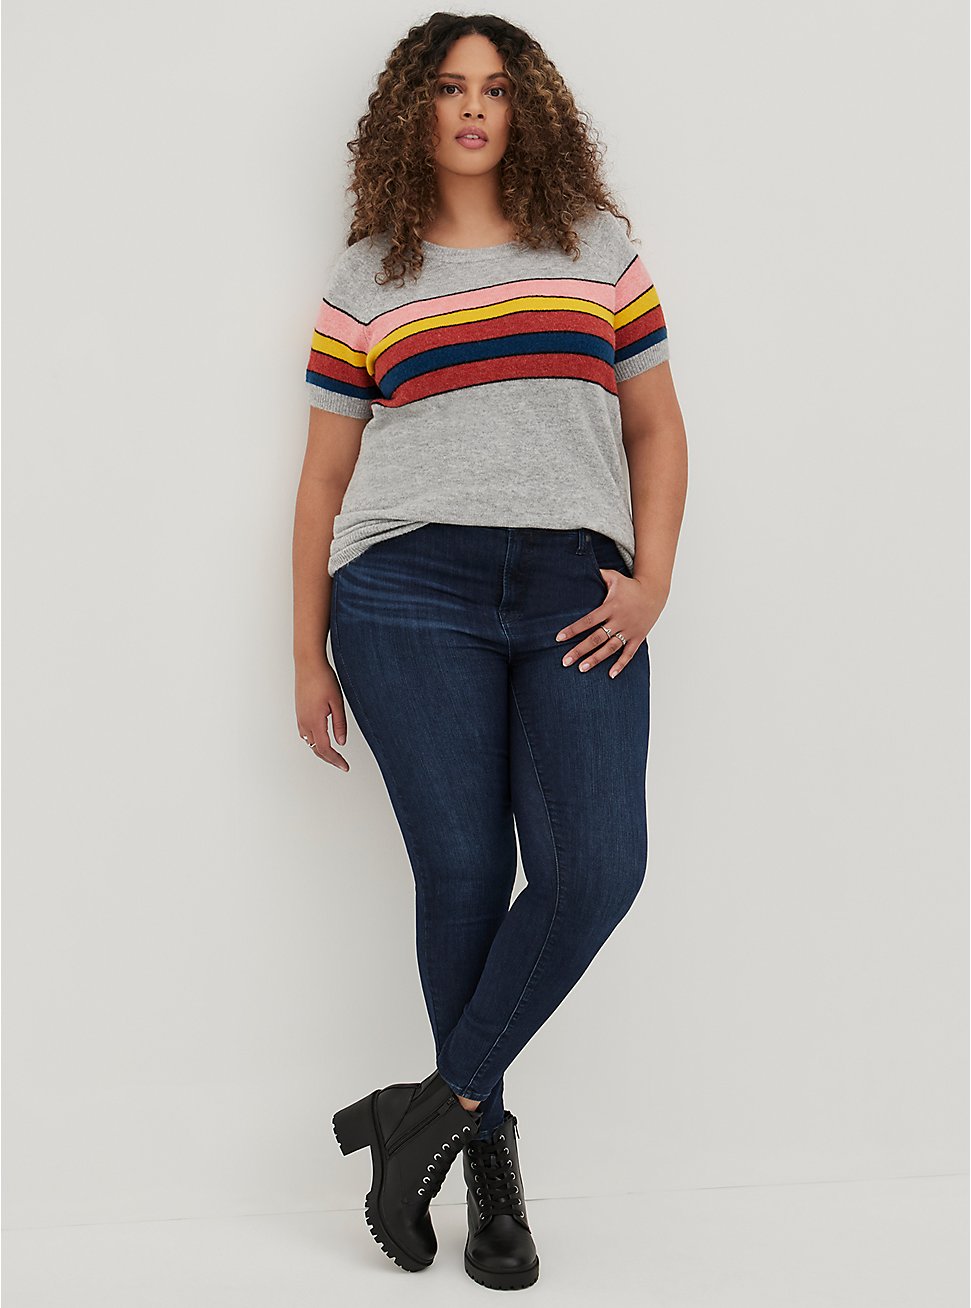 Plus Size Raglan Pullover Sweater - Stripes Grey, GRAY HTR, hi-res